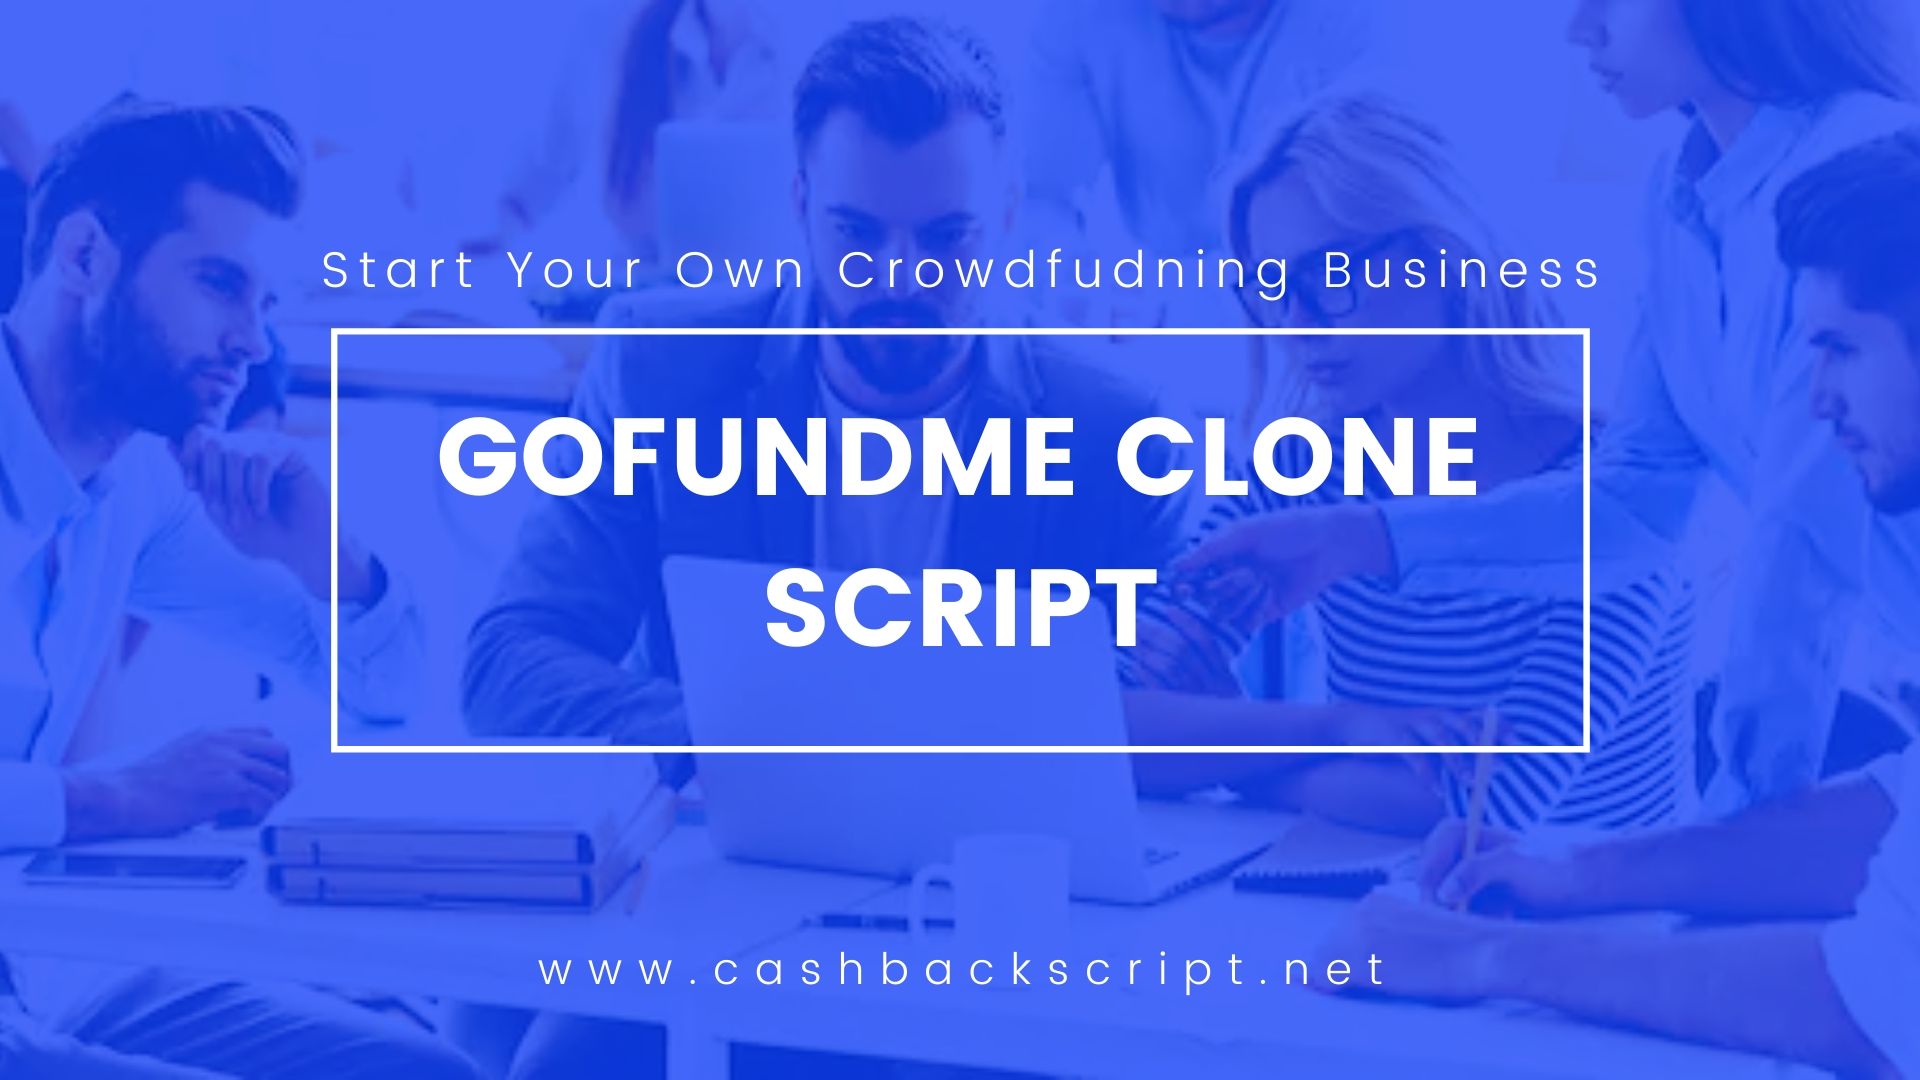 GoFundMe Clone Script to Start Crowdfunding Business Like GoFundMe